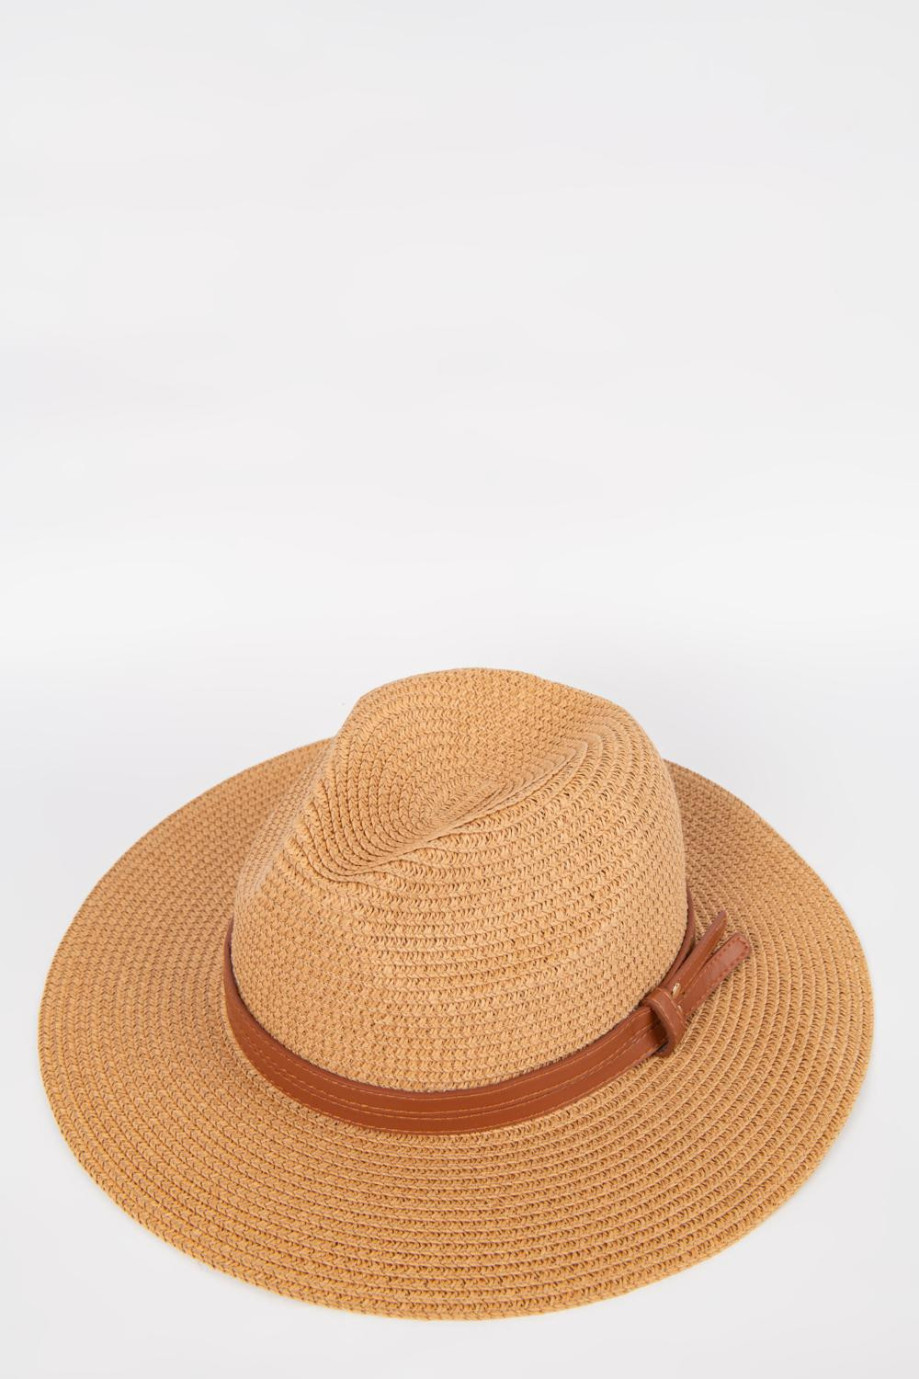 Sombrero kaky claro tipo fedora con ala ancha y cinta decorativa